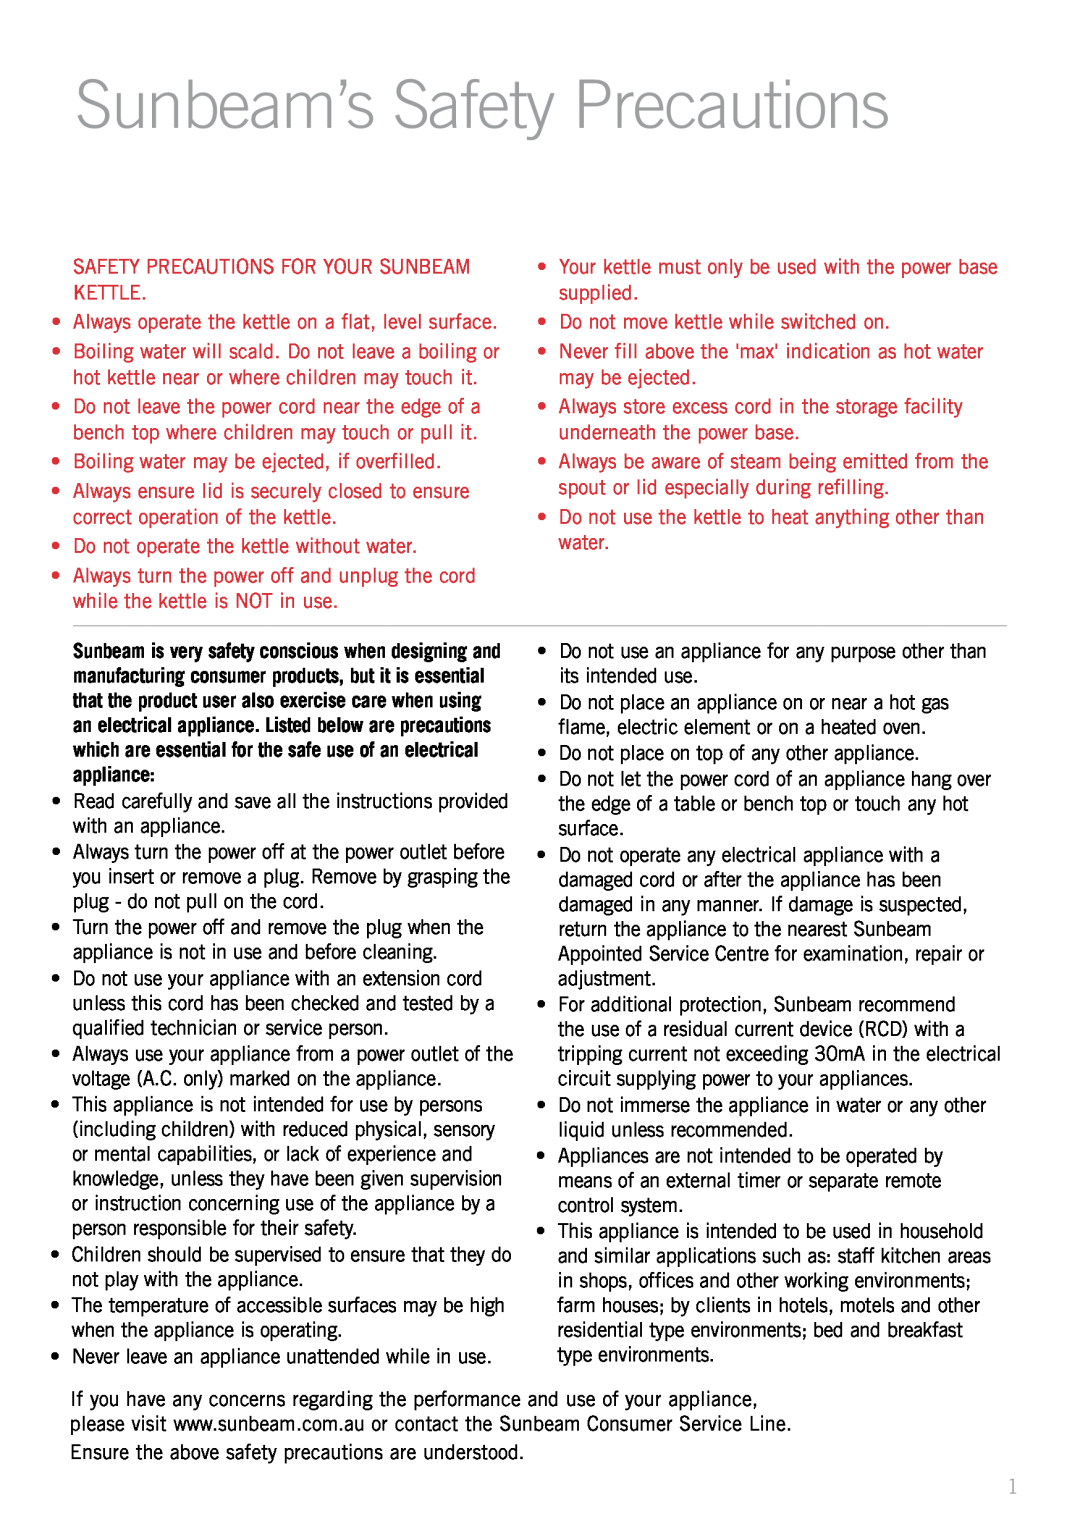 Sunbeam KE7110 manual Sunbeam’s Safety Precautions, appliance 